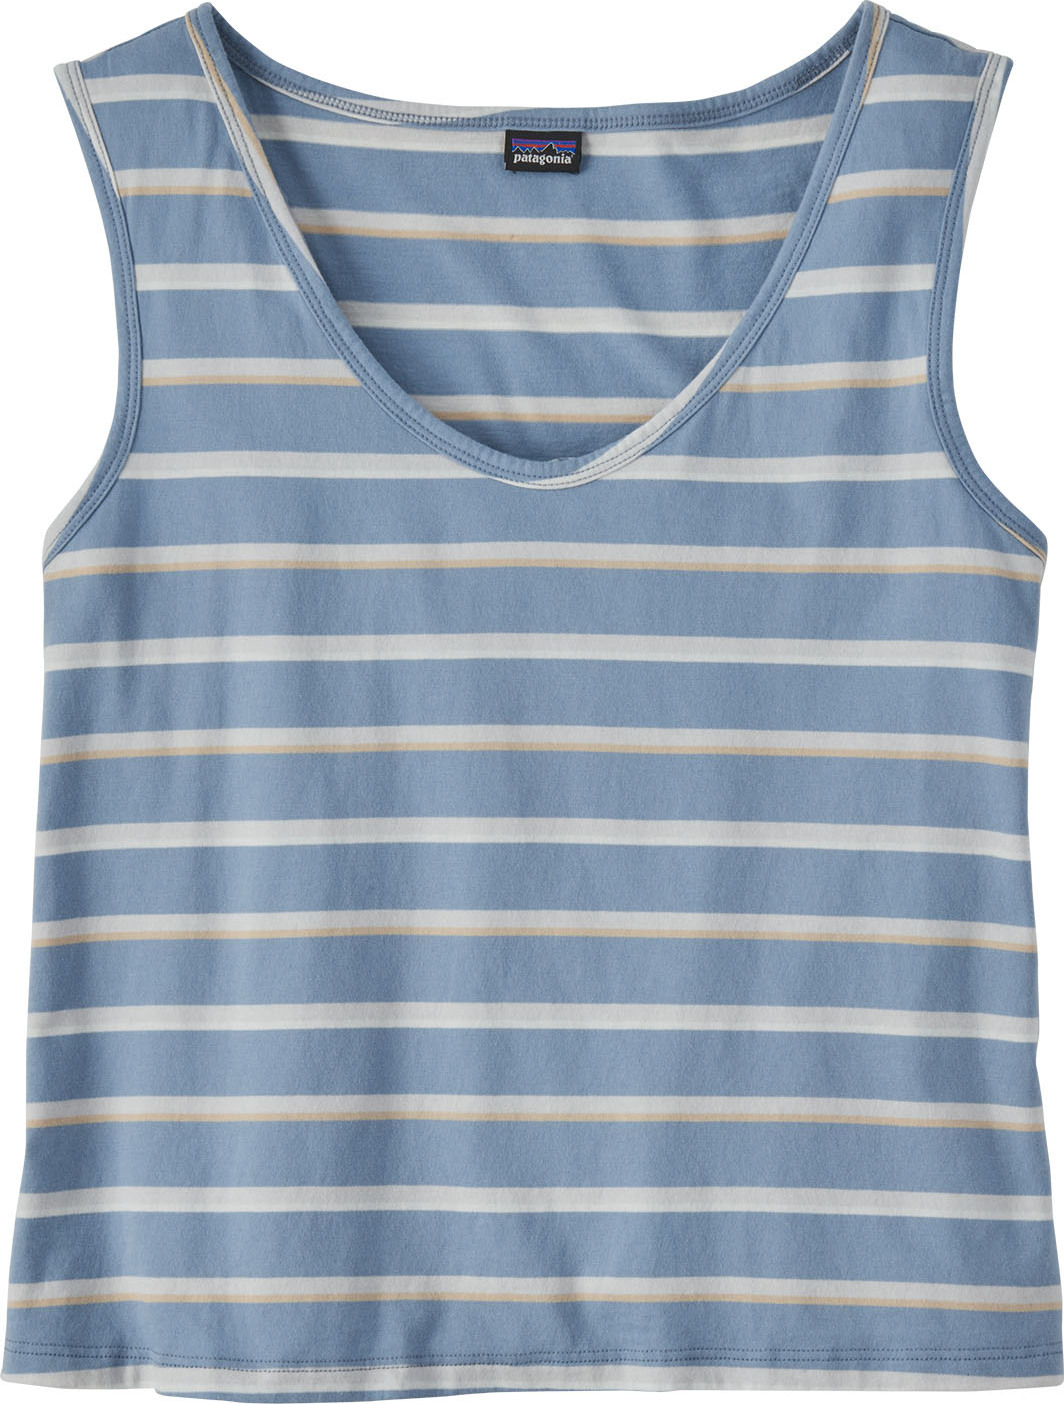 Cotton Tank Top - Dark blue/white striped - Ladies